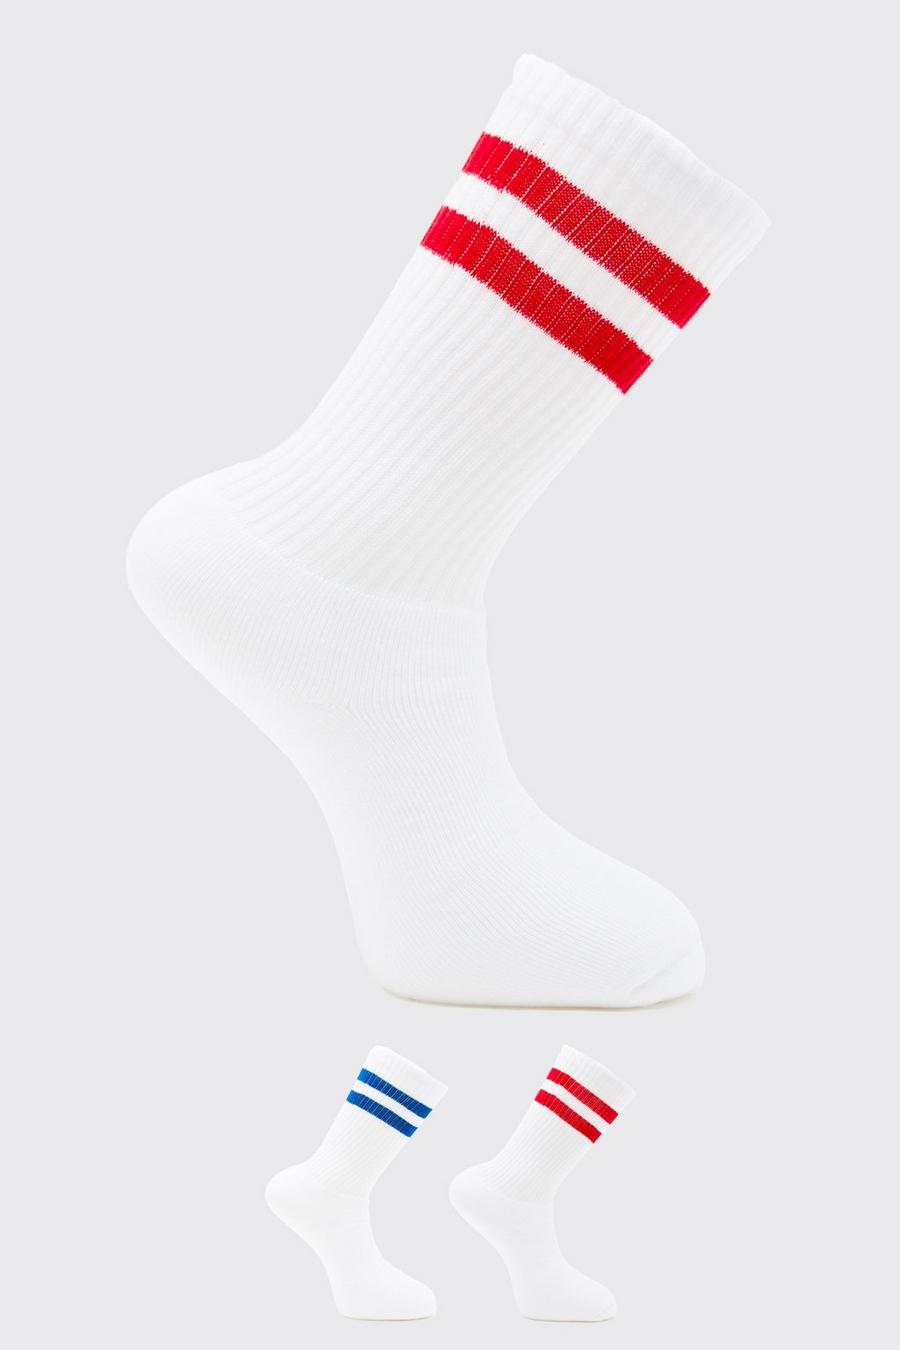 Pack de 2 pares de calcetines deportivos mixtos con rayas, White bianco